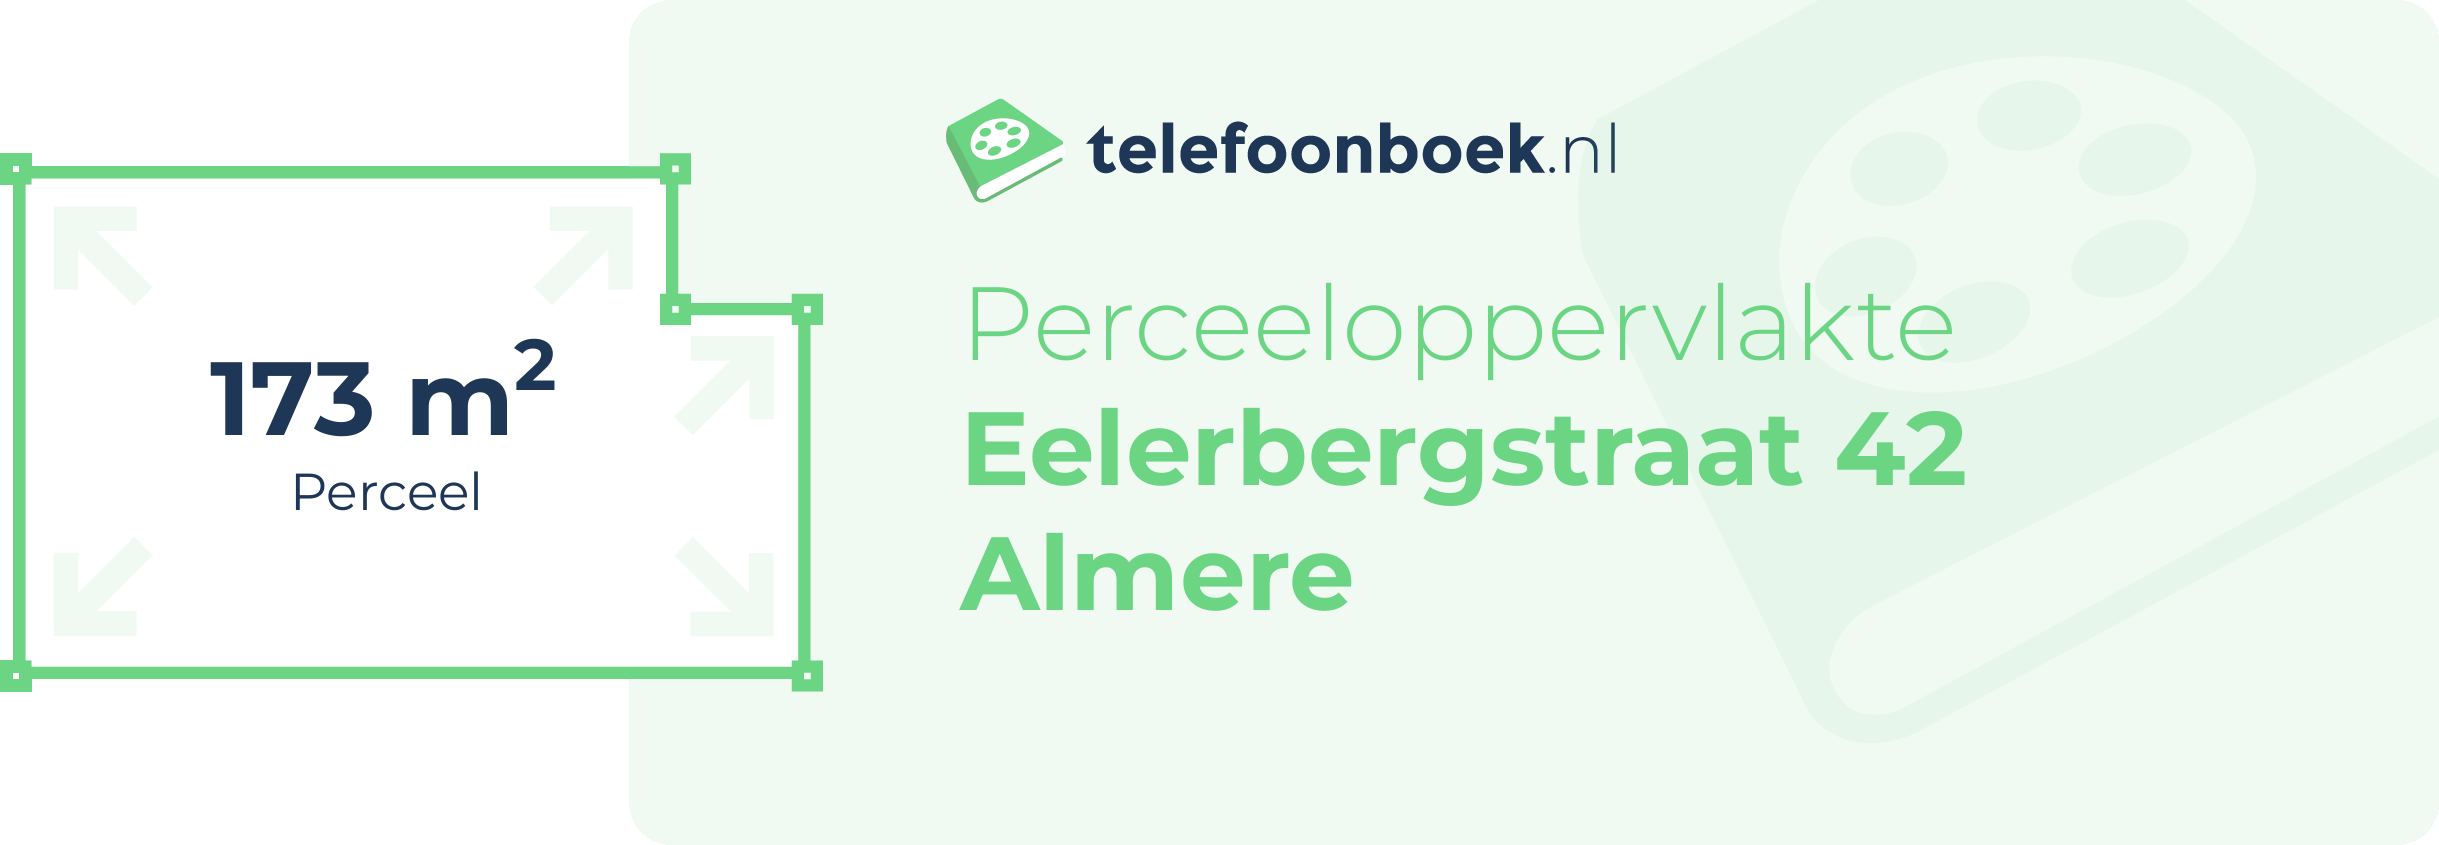 Perceeloppervlakte Eelerbergstraat 42 Almere